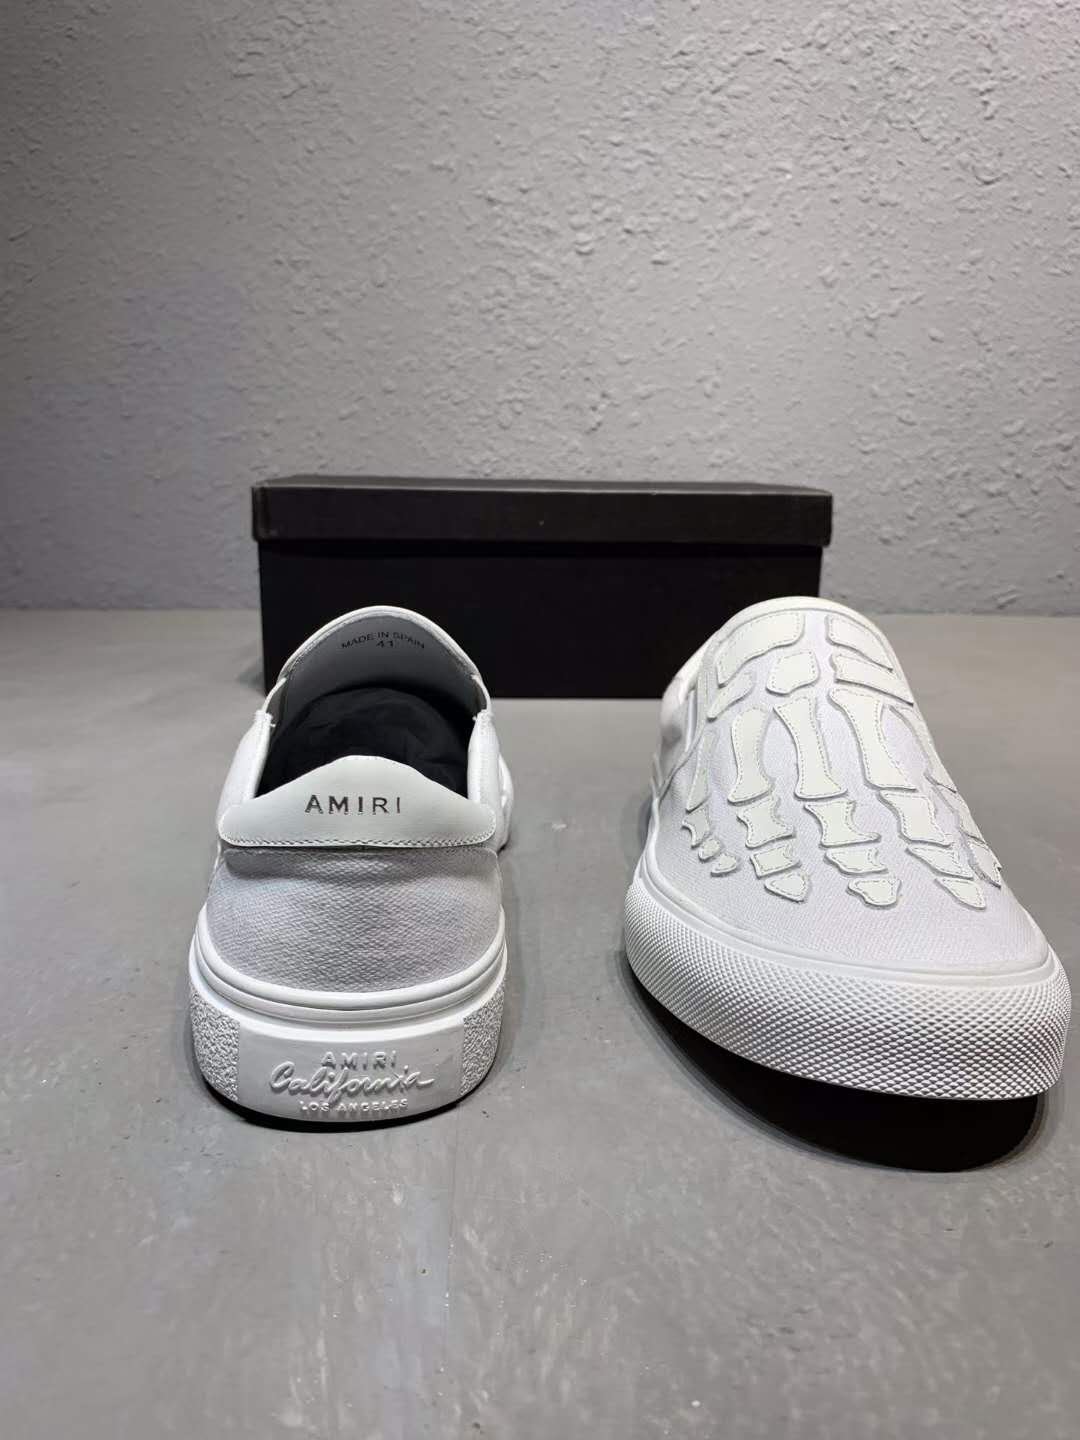 Man Shoes Amiri Skeleton Slip-on Sneakers Low-top Fashion White Shoes